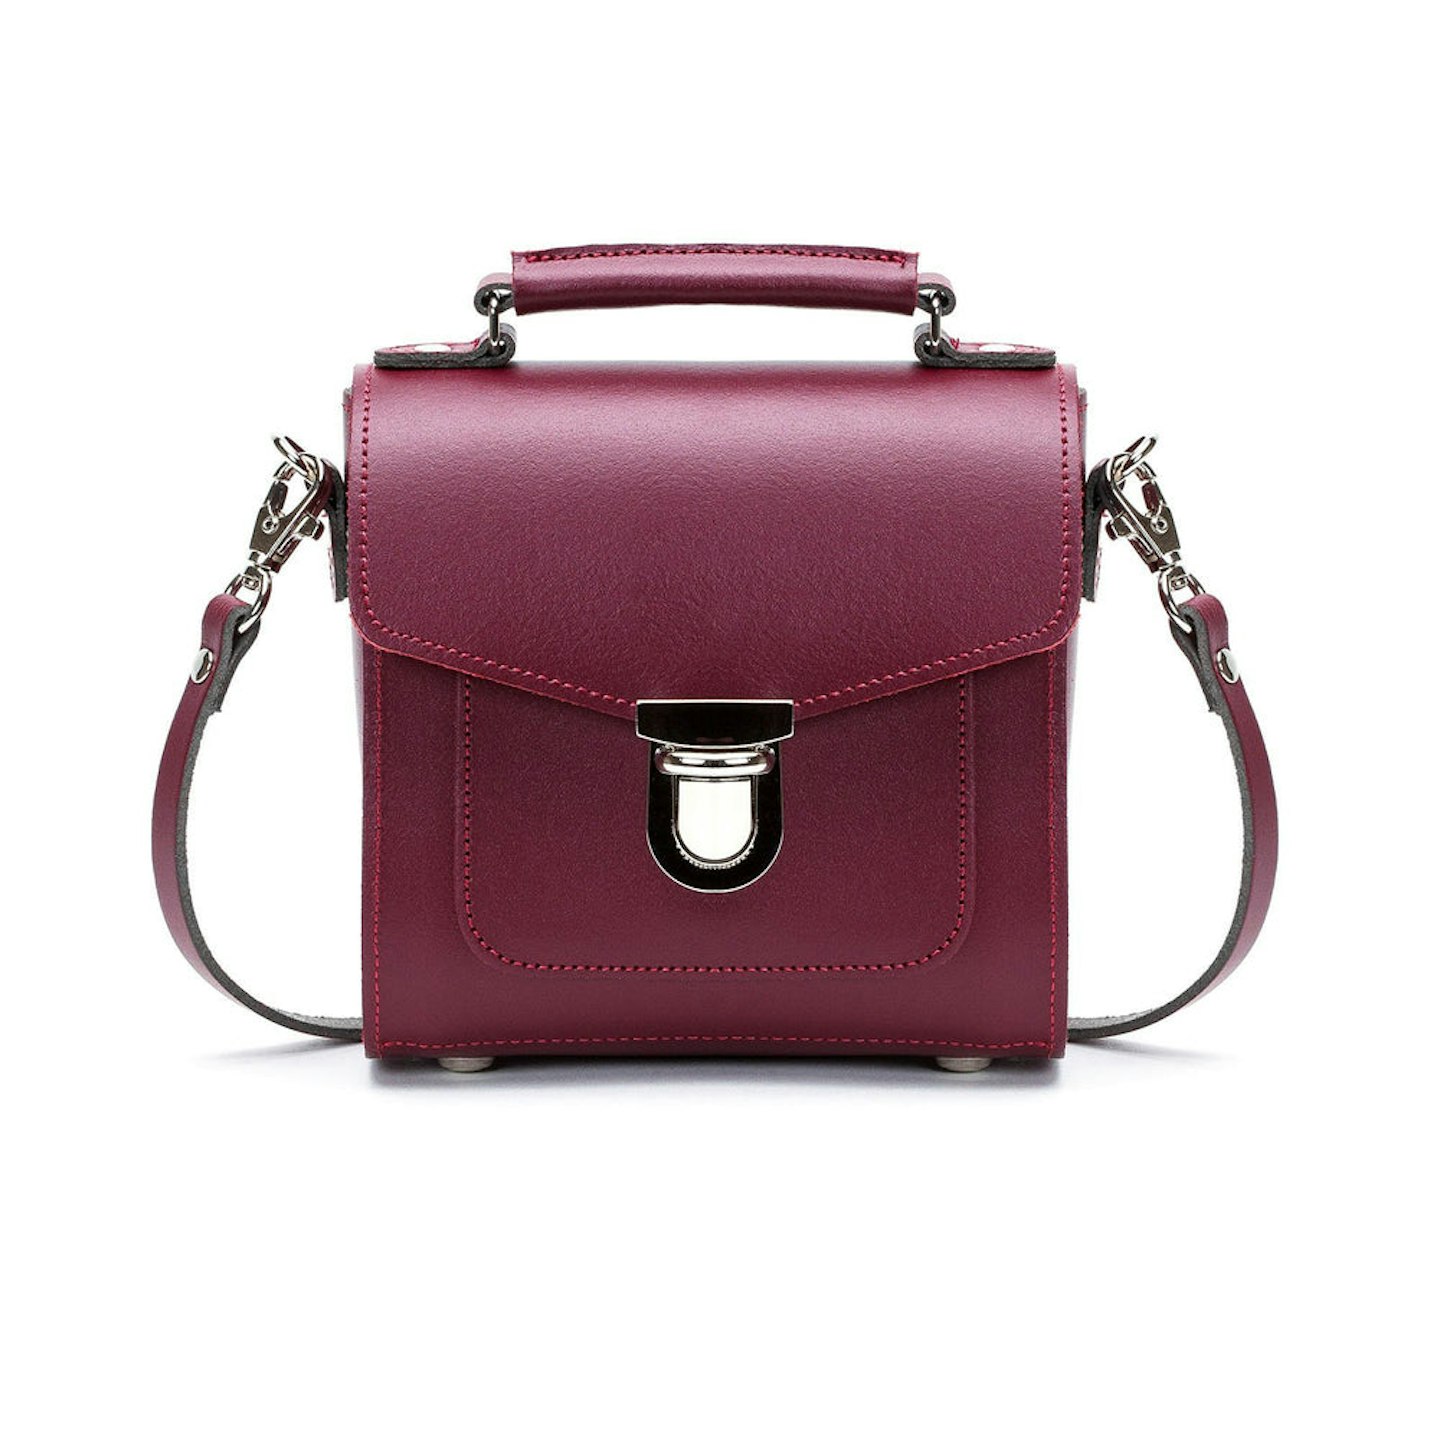 Zatchels purple leather sugarcube handbag